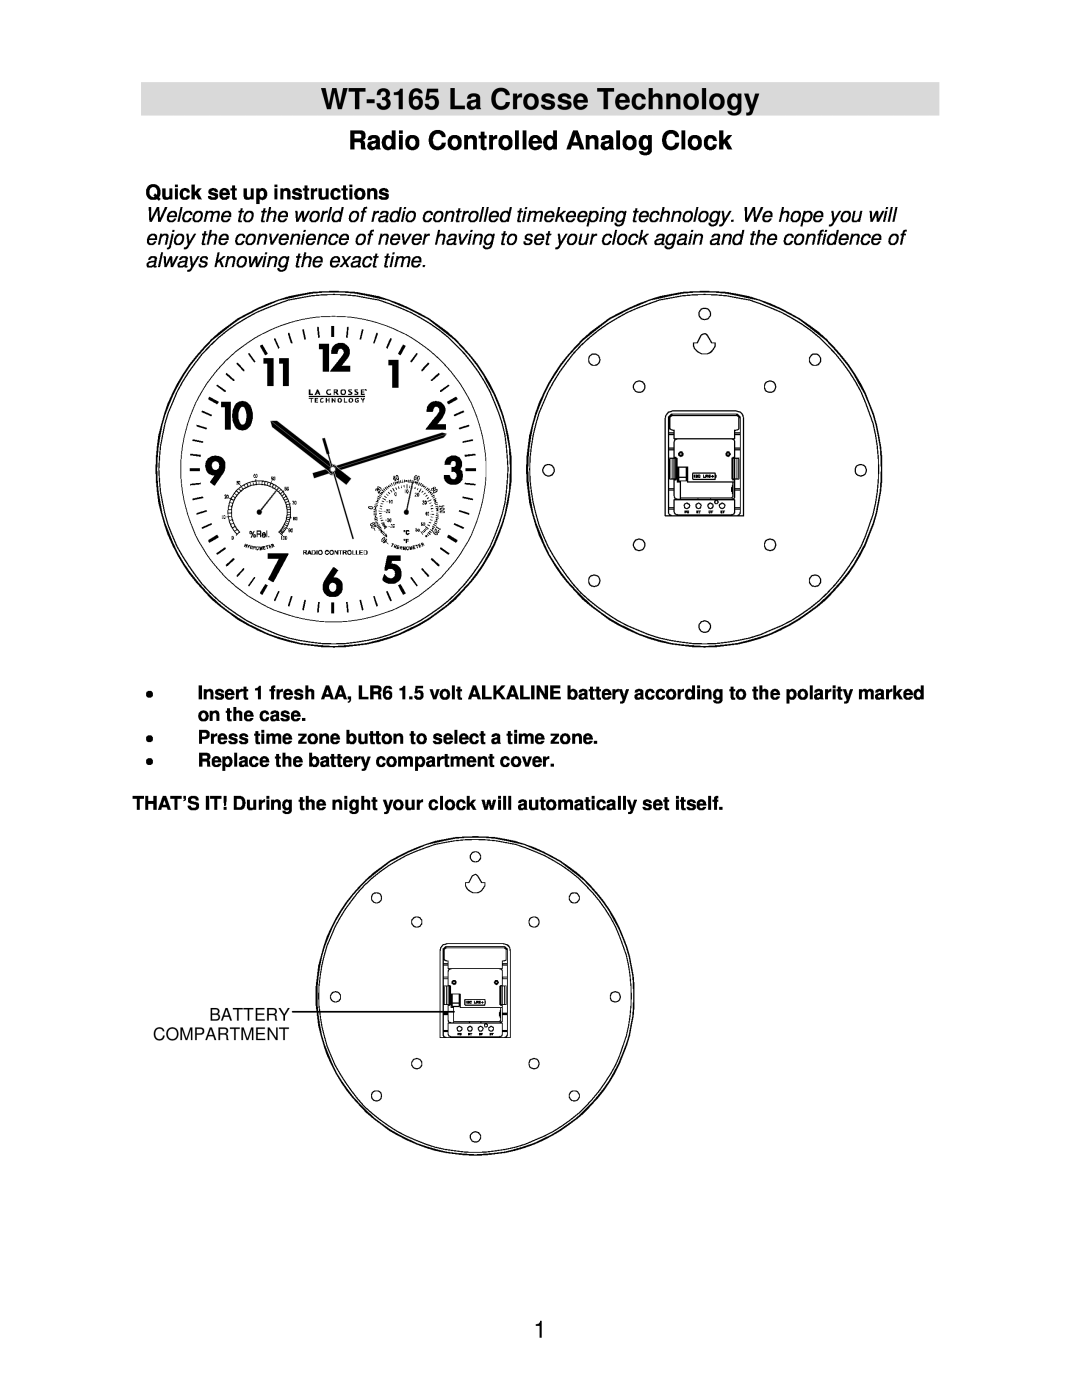 La Crosse Technology manual Quick set up instructions, WT-3165 La Crosse Technology, Radio Controlled Analog Clock 